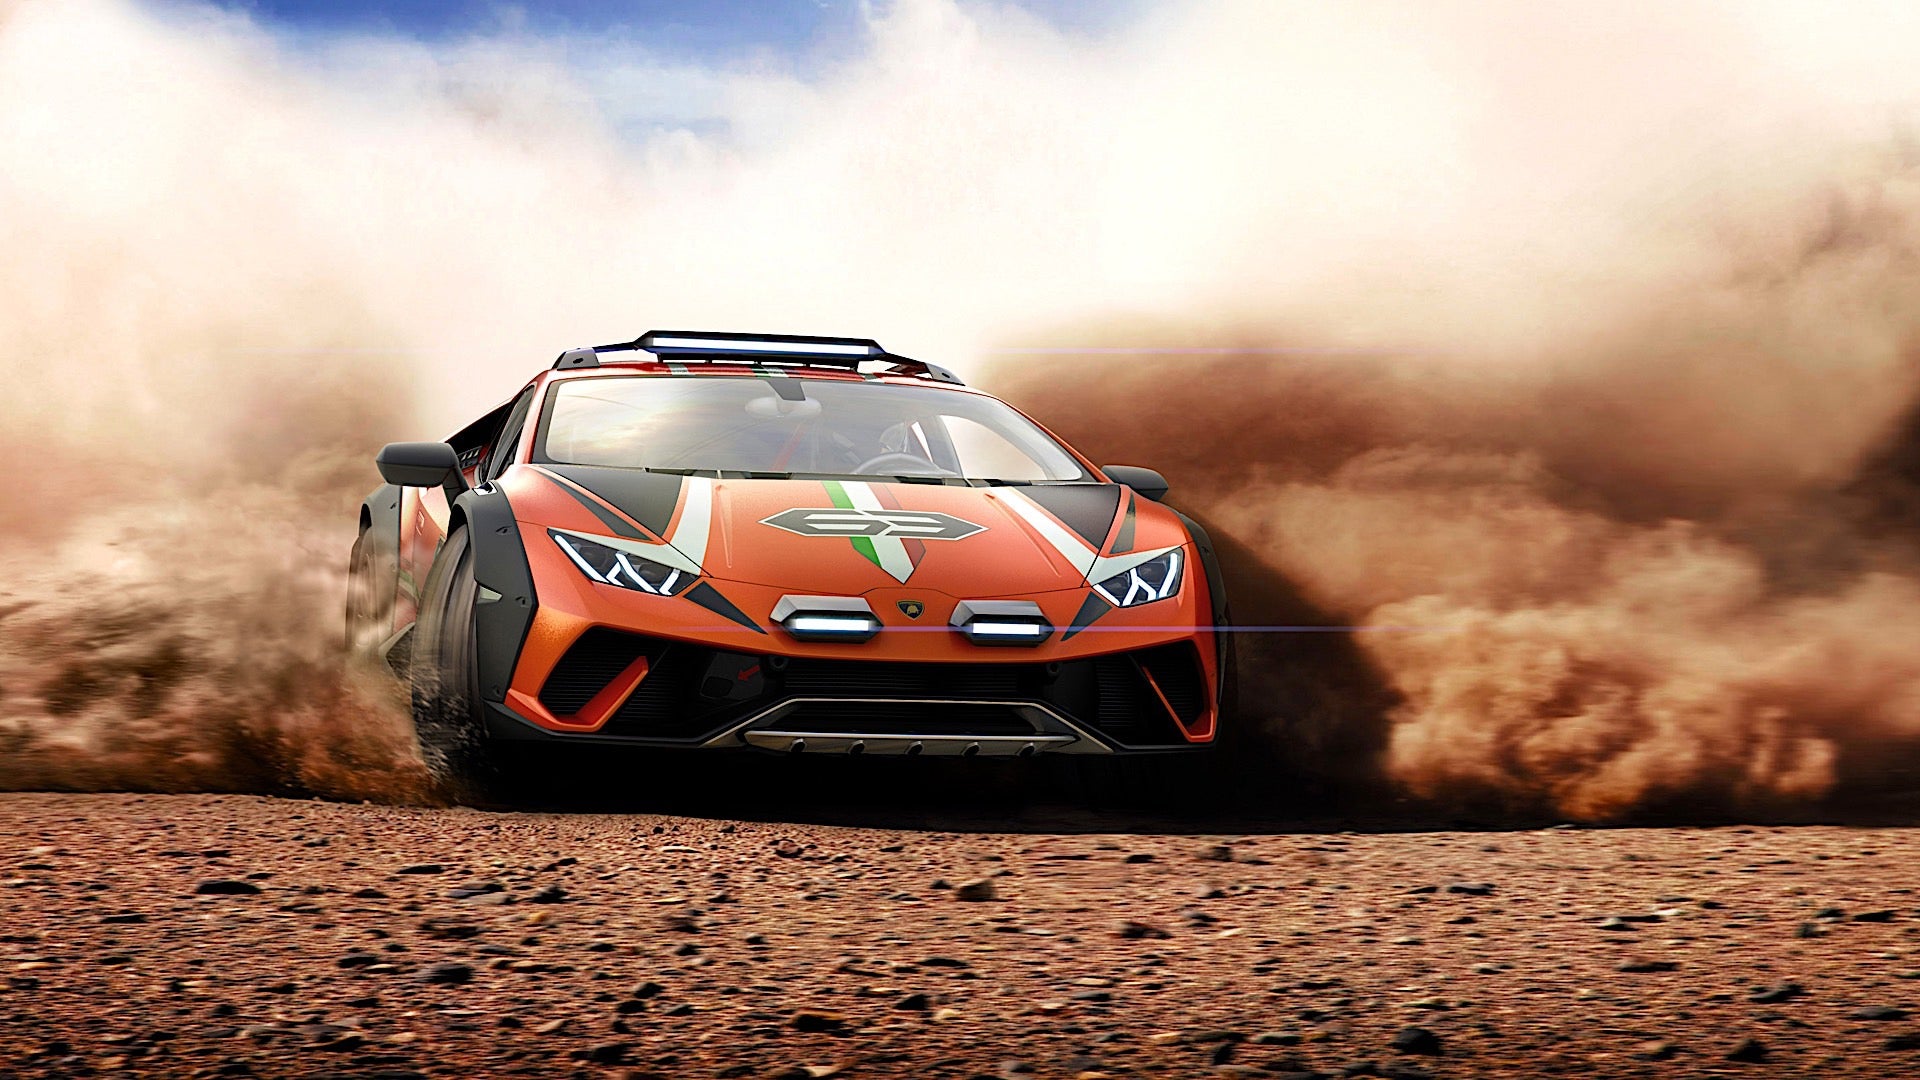 Lamborghini’s Huracán Sterrato Concept Brings Italian Insanity to Dirt and Mud